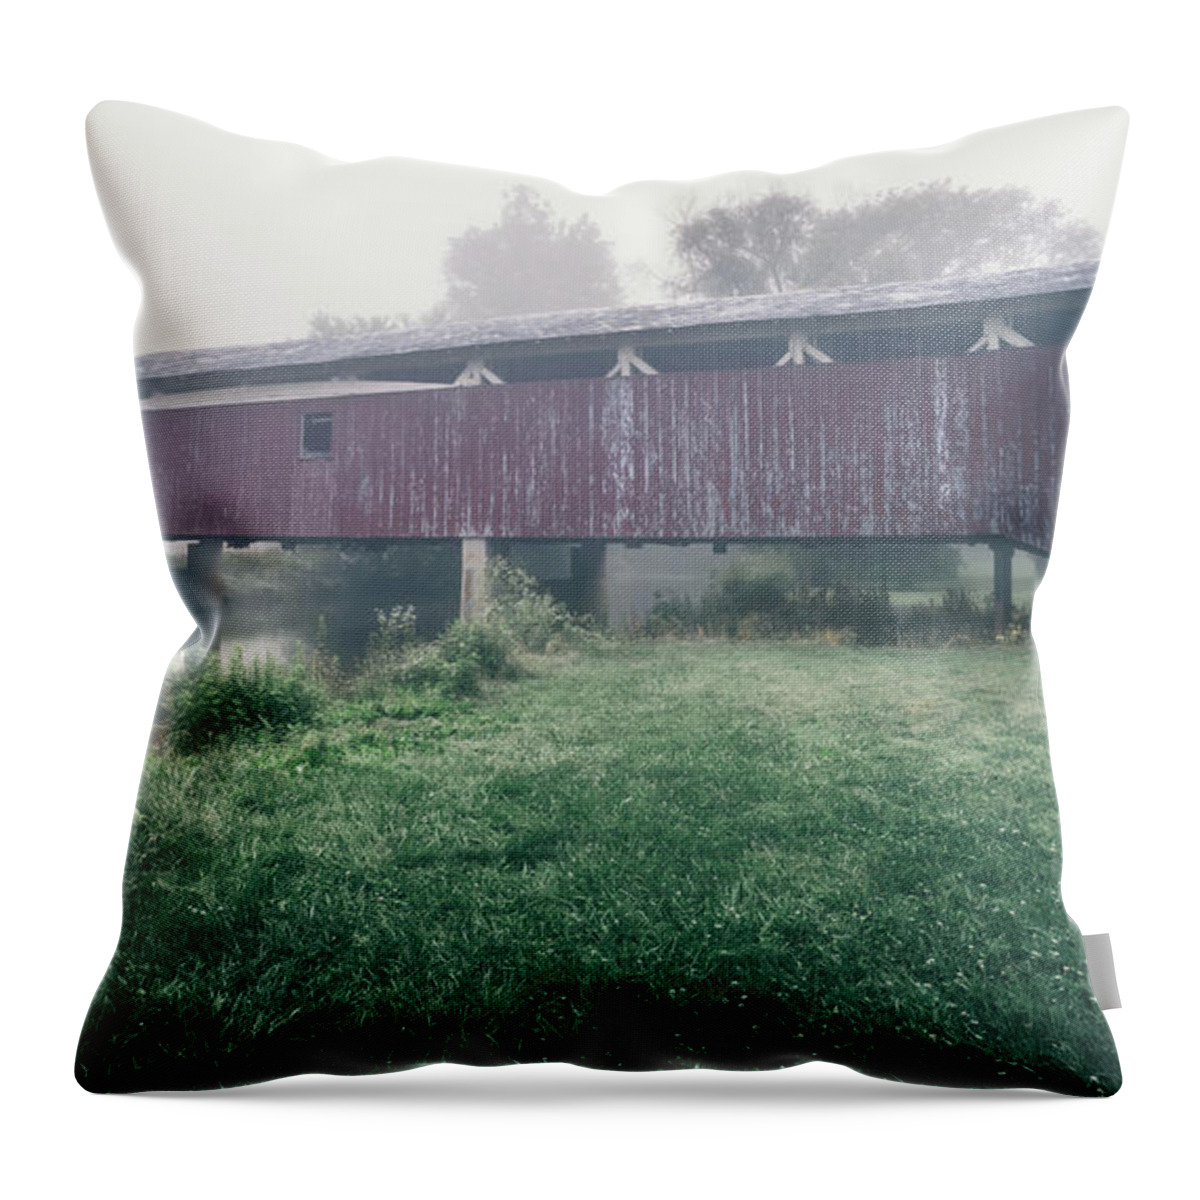 Allentown Throw Pillow featuring the photograph Bogert's Covered Bridge Misty June by Jason Fink